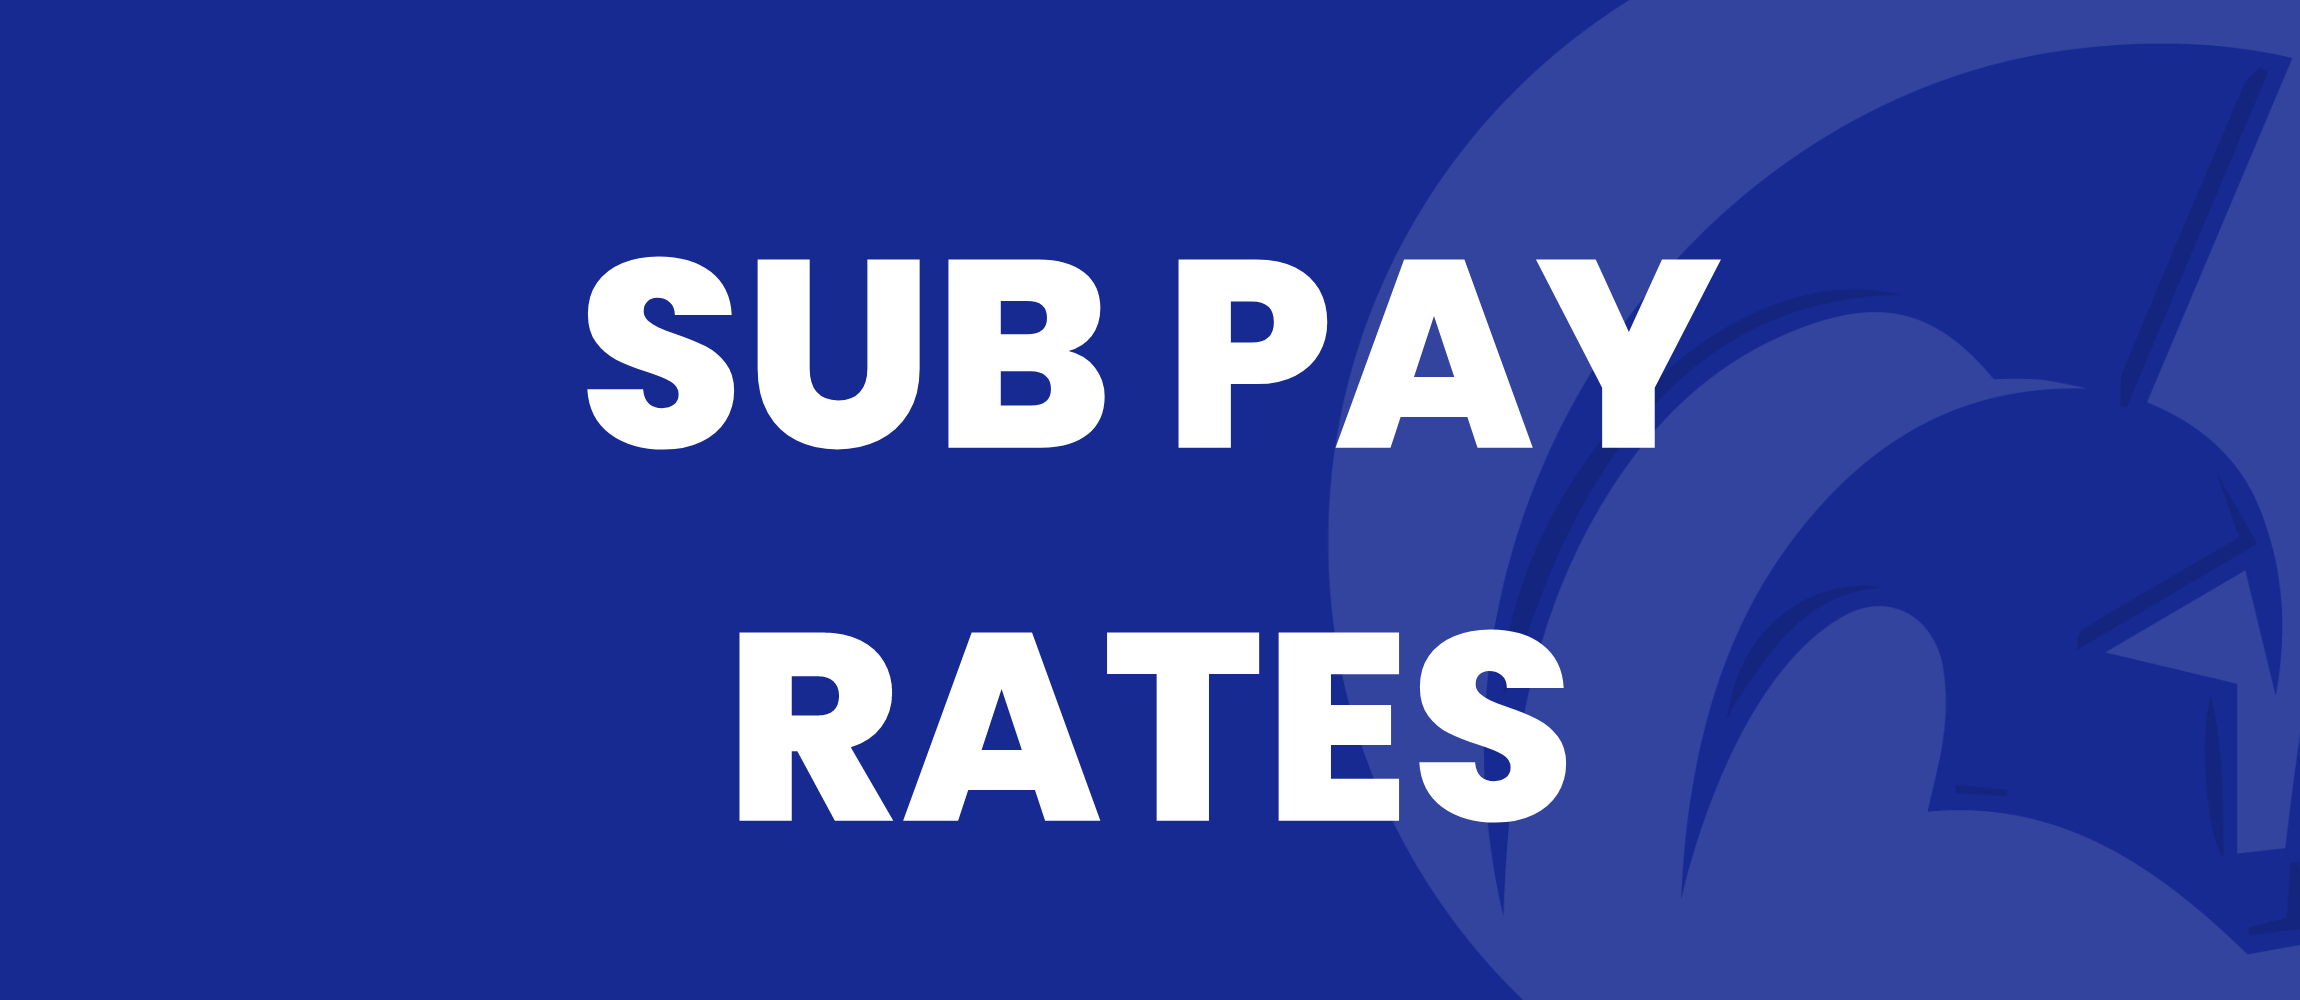 Sub Pay Rates